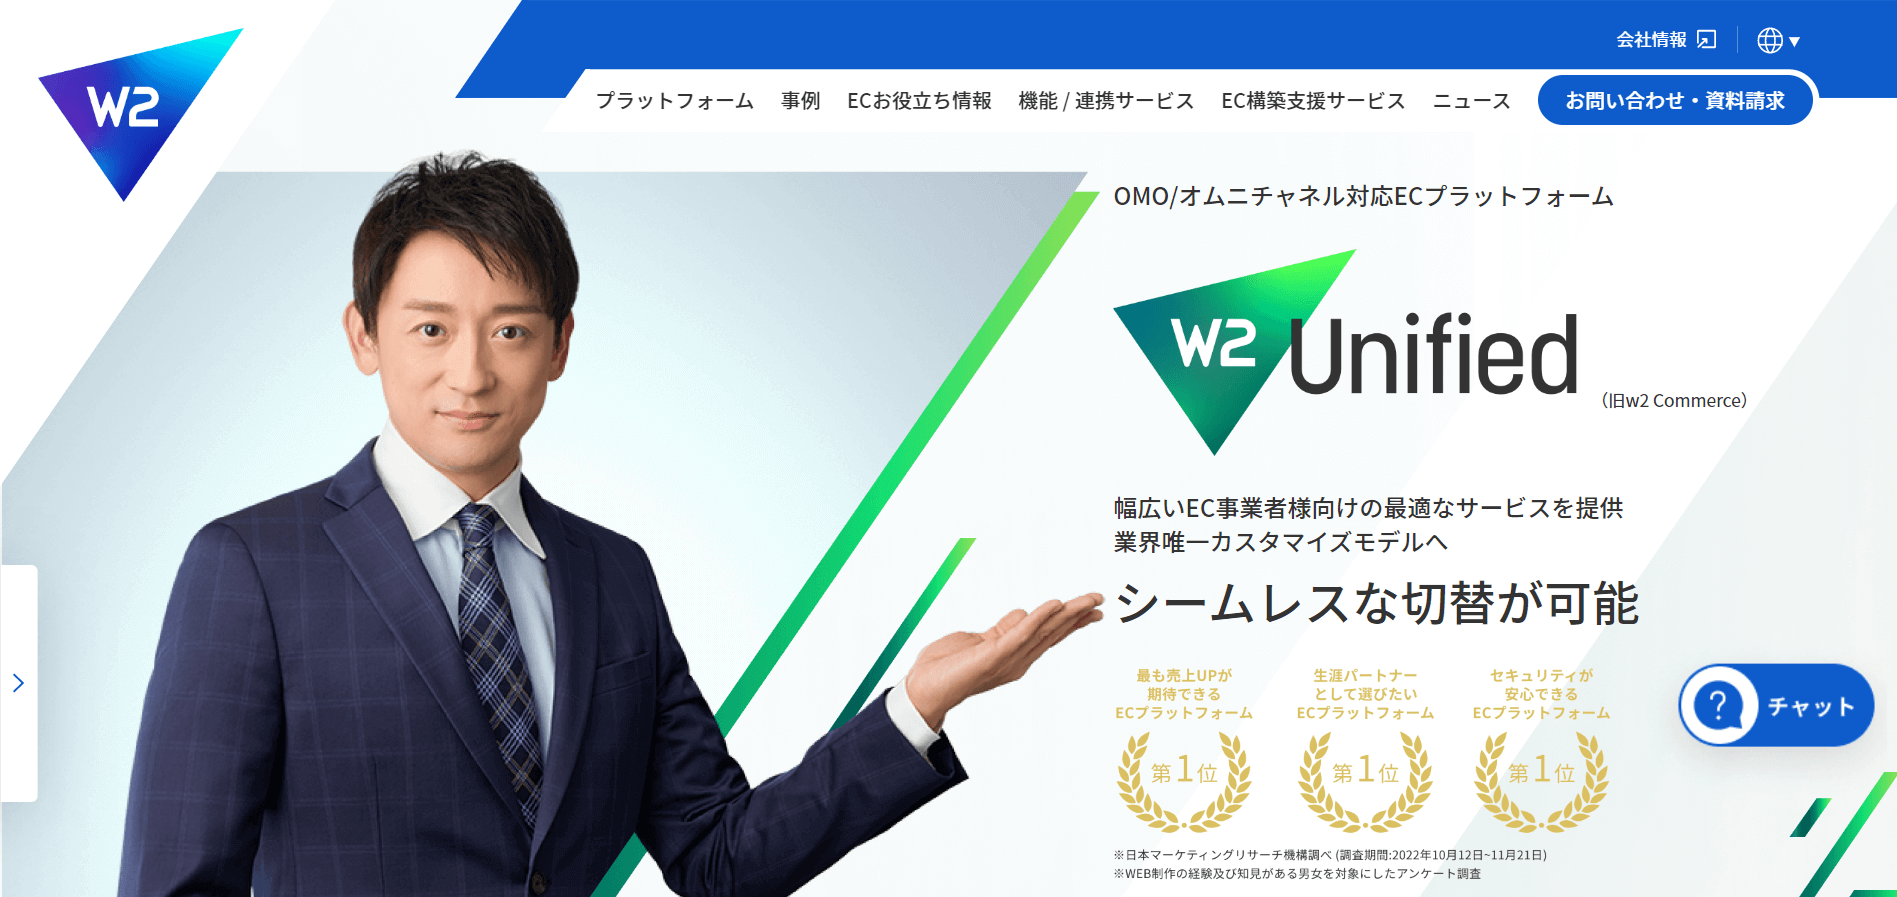 W2 Unified（旧：W2 Commerce）